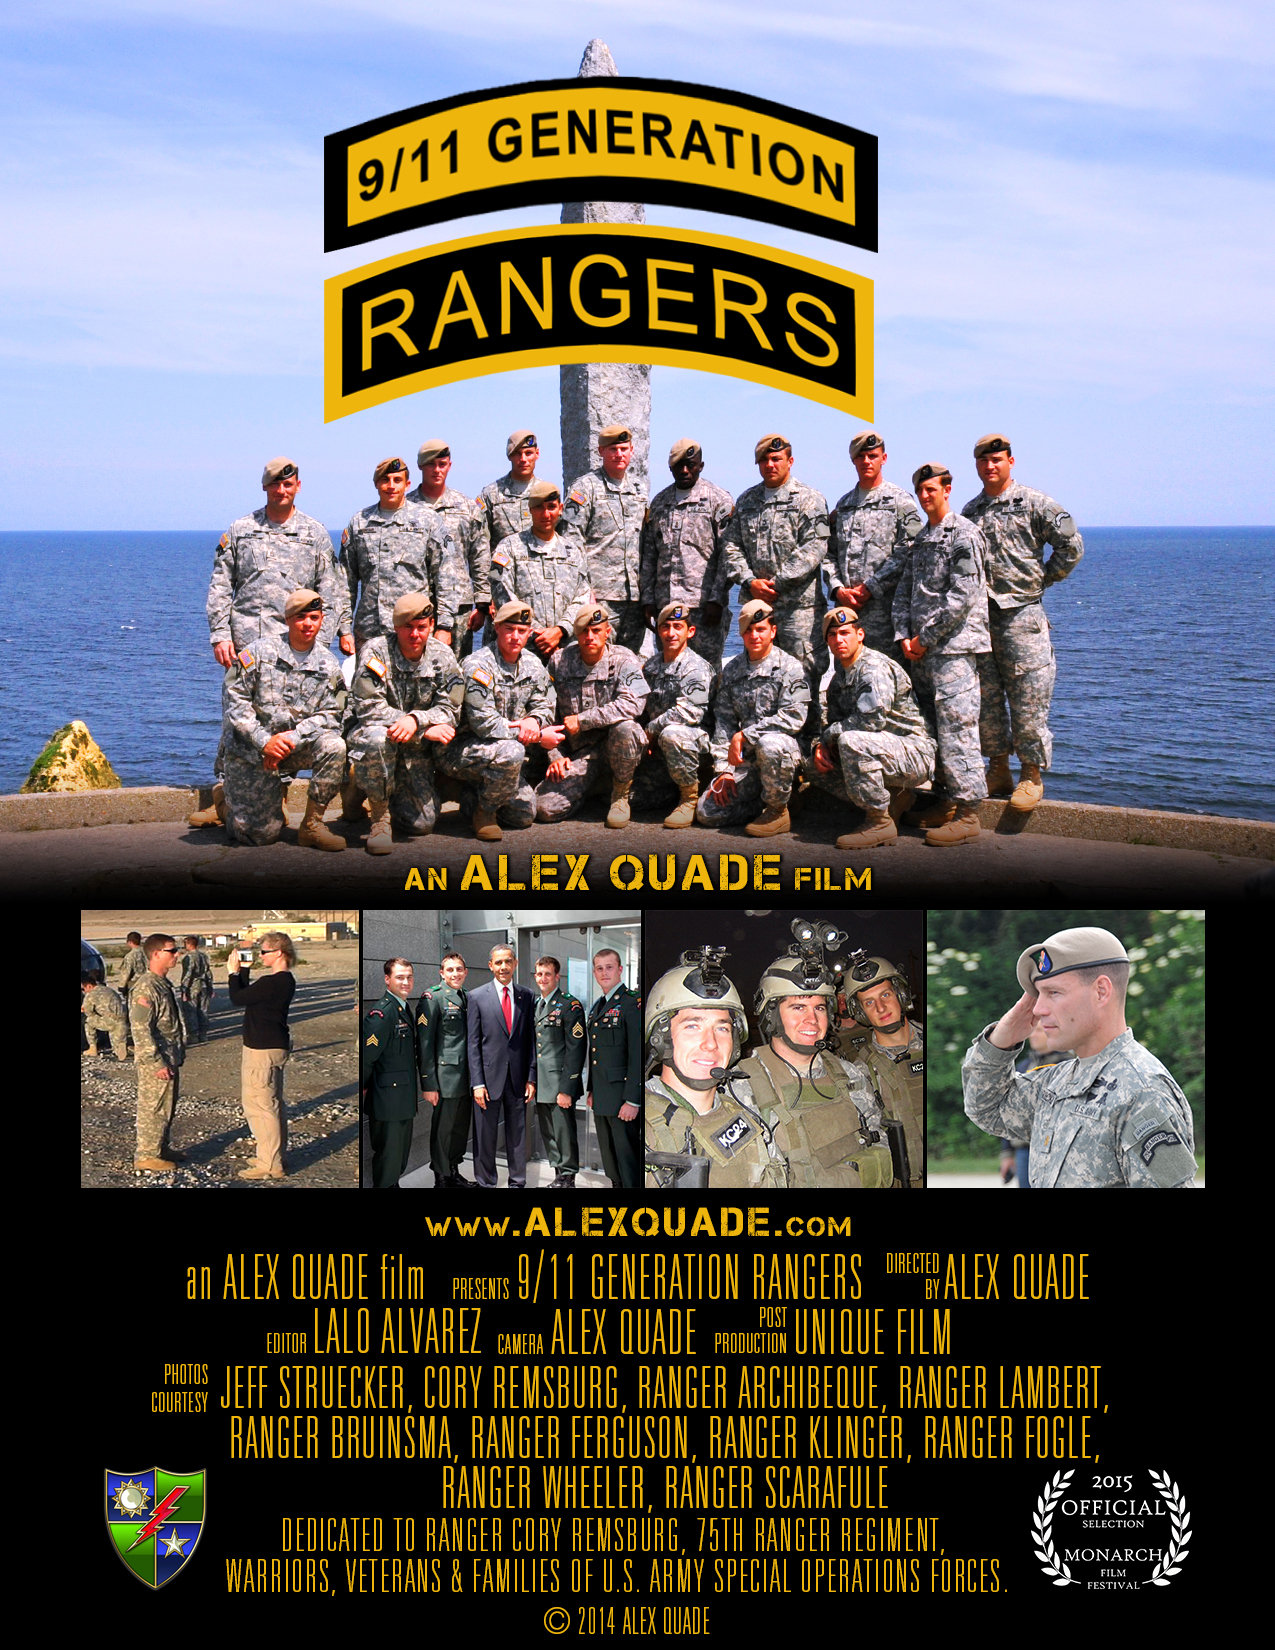 9/11 Generation Rangers